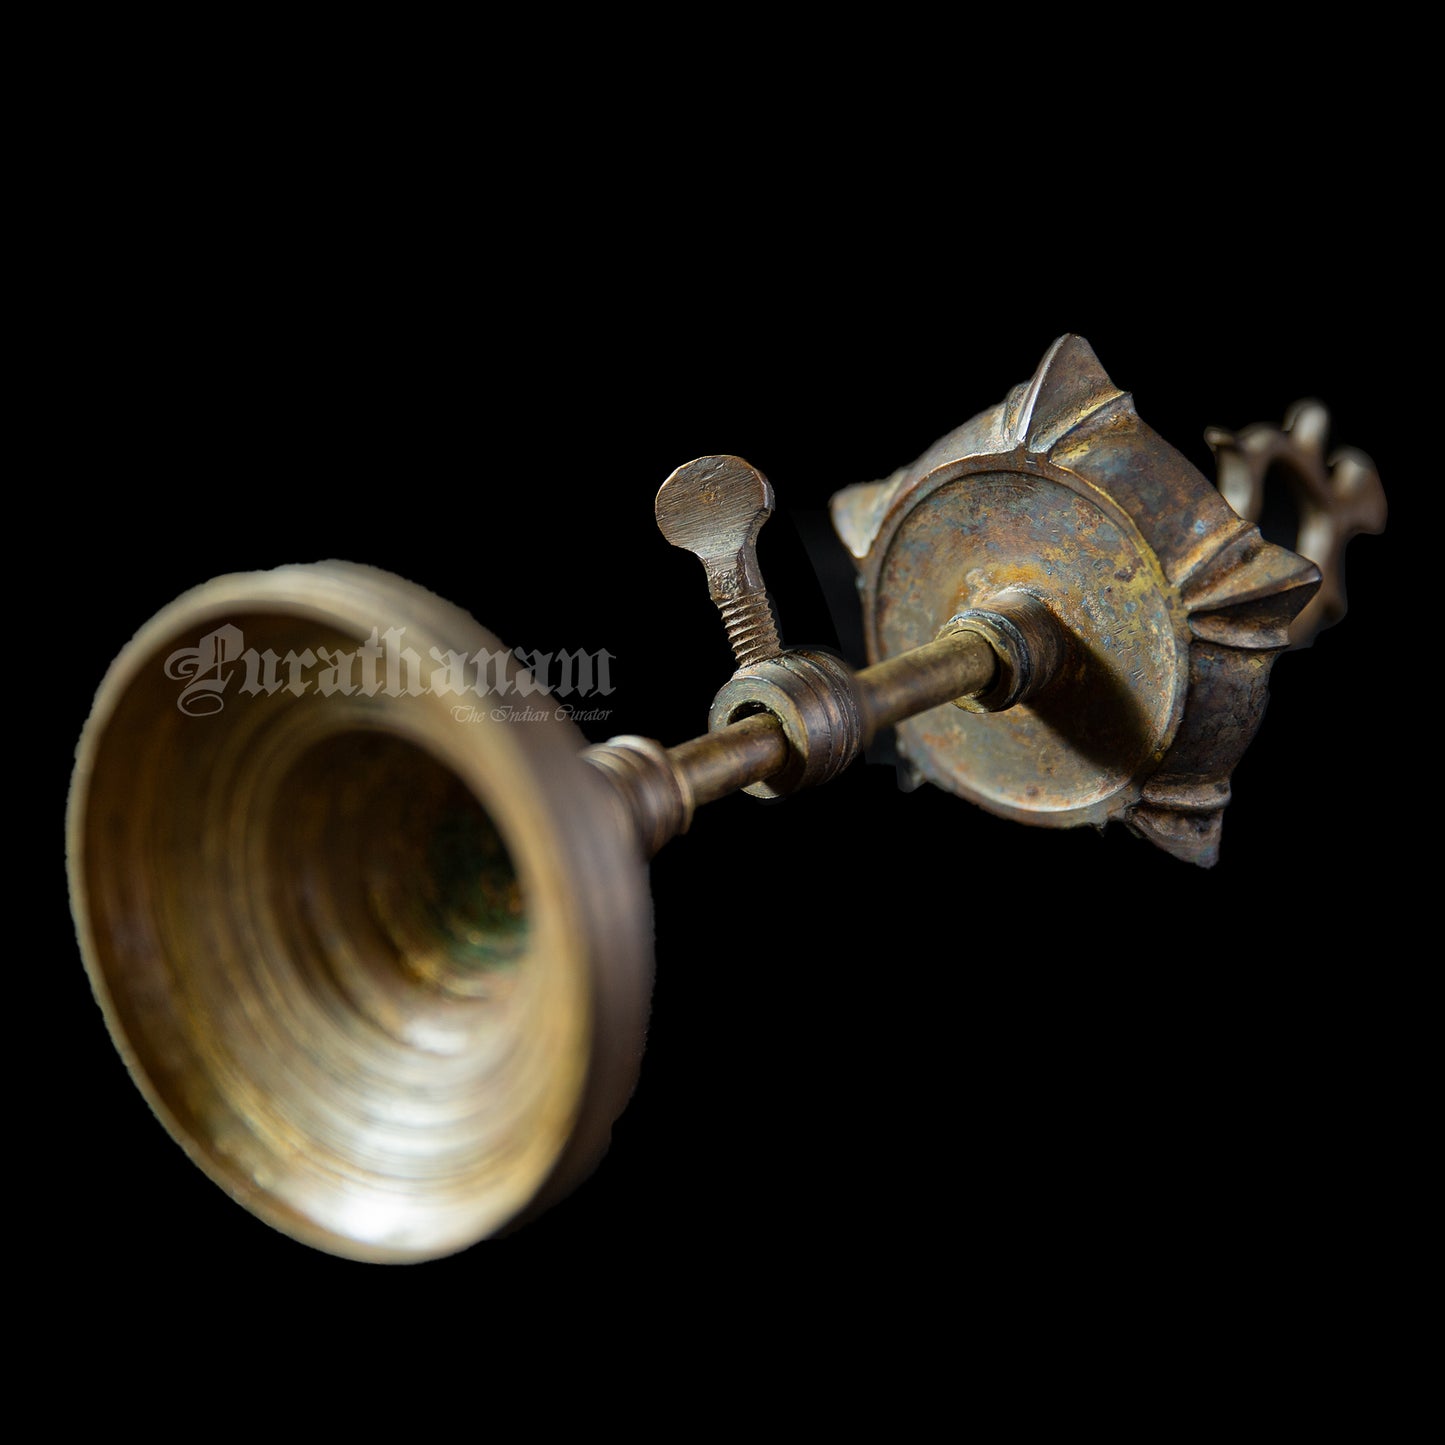 Kuthuvilakku (Oil Lamp) - Brass